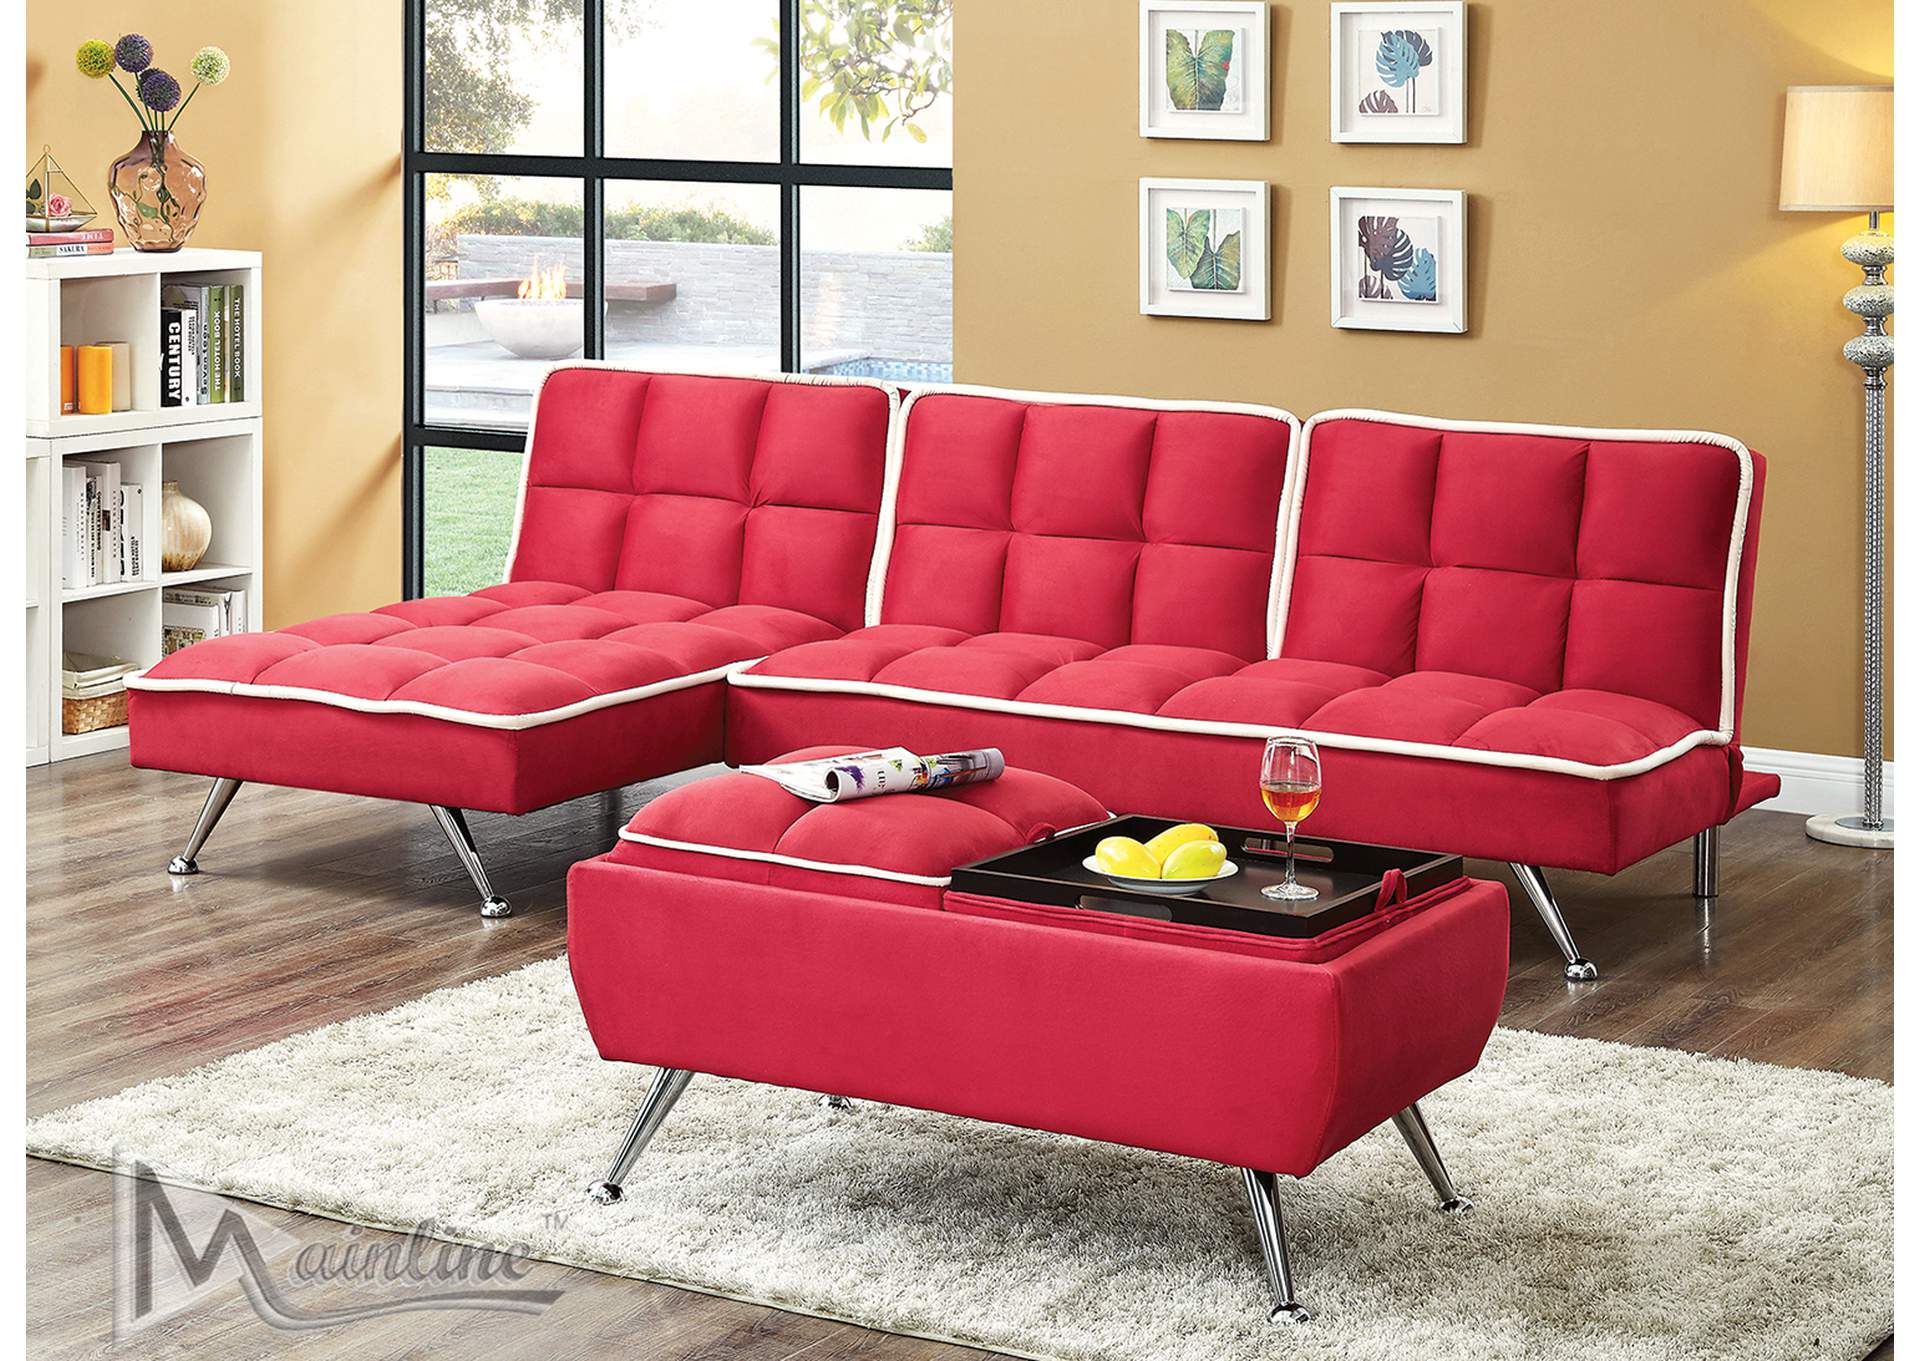 Red Zeppoles Kklak Sofa Bed,Mainline